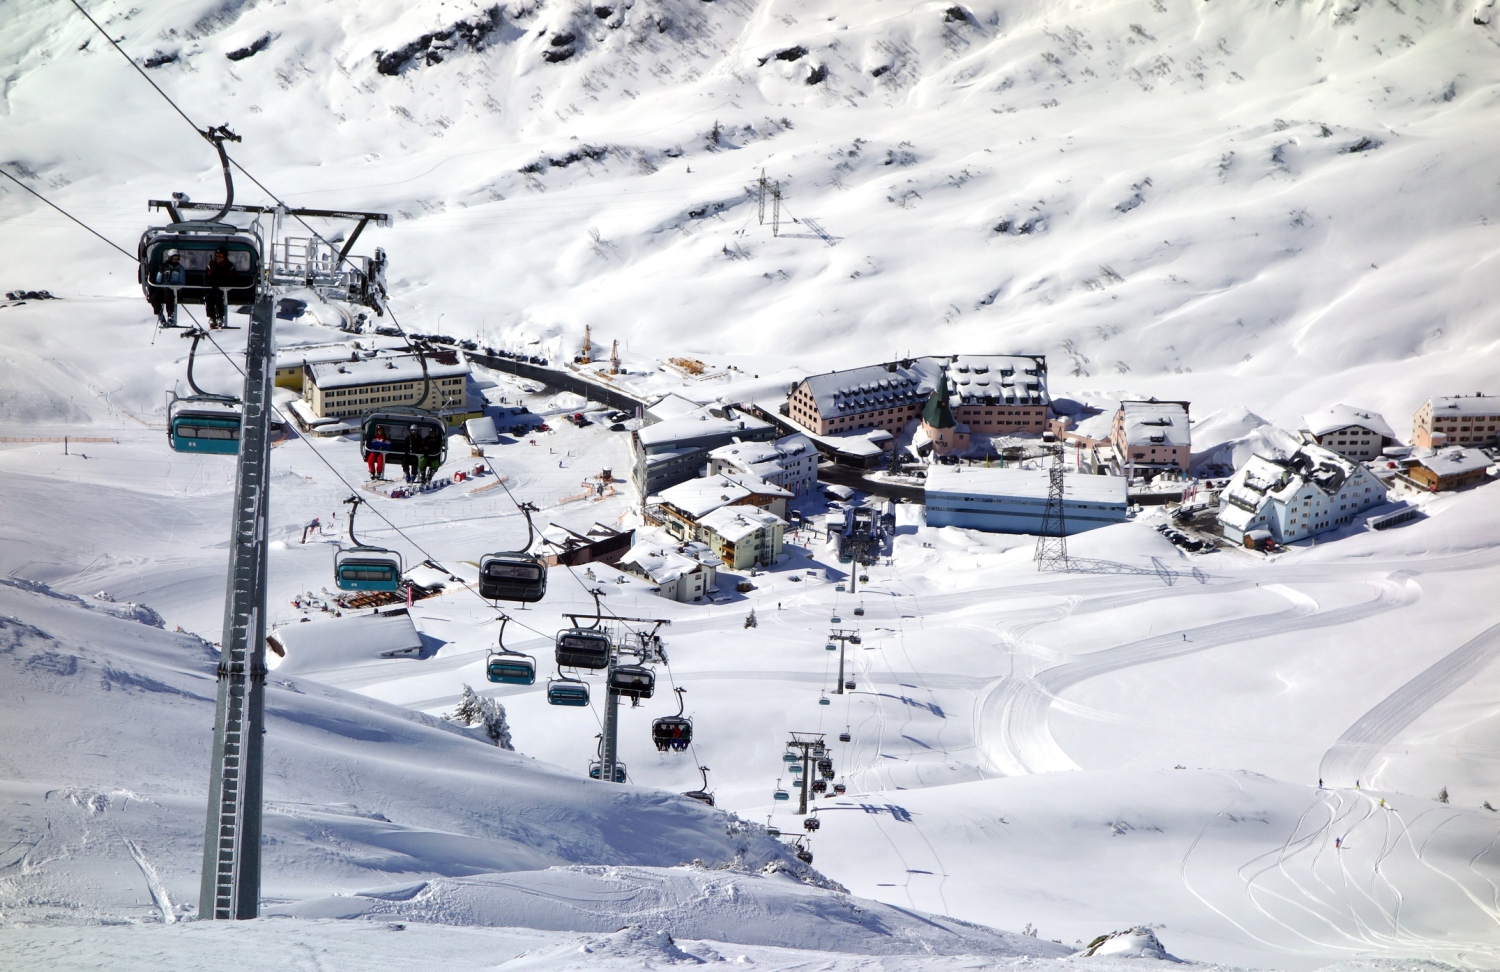 st-christoph-ski-resort-austria